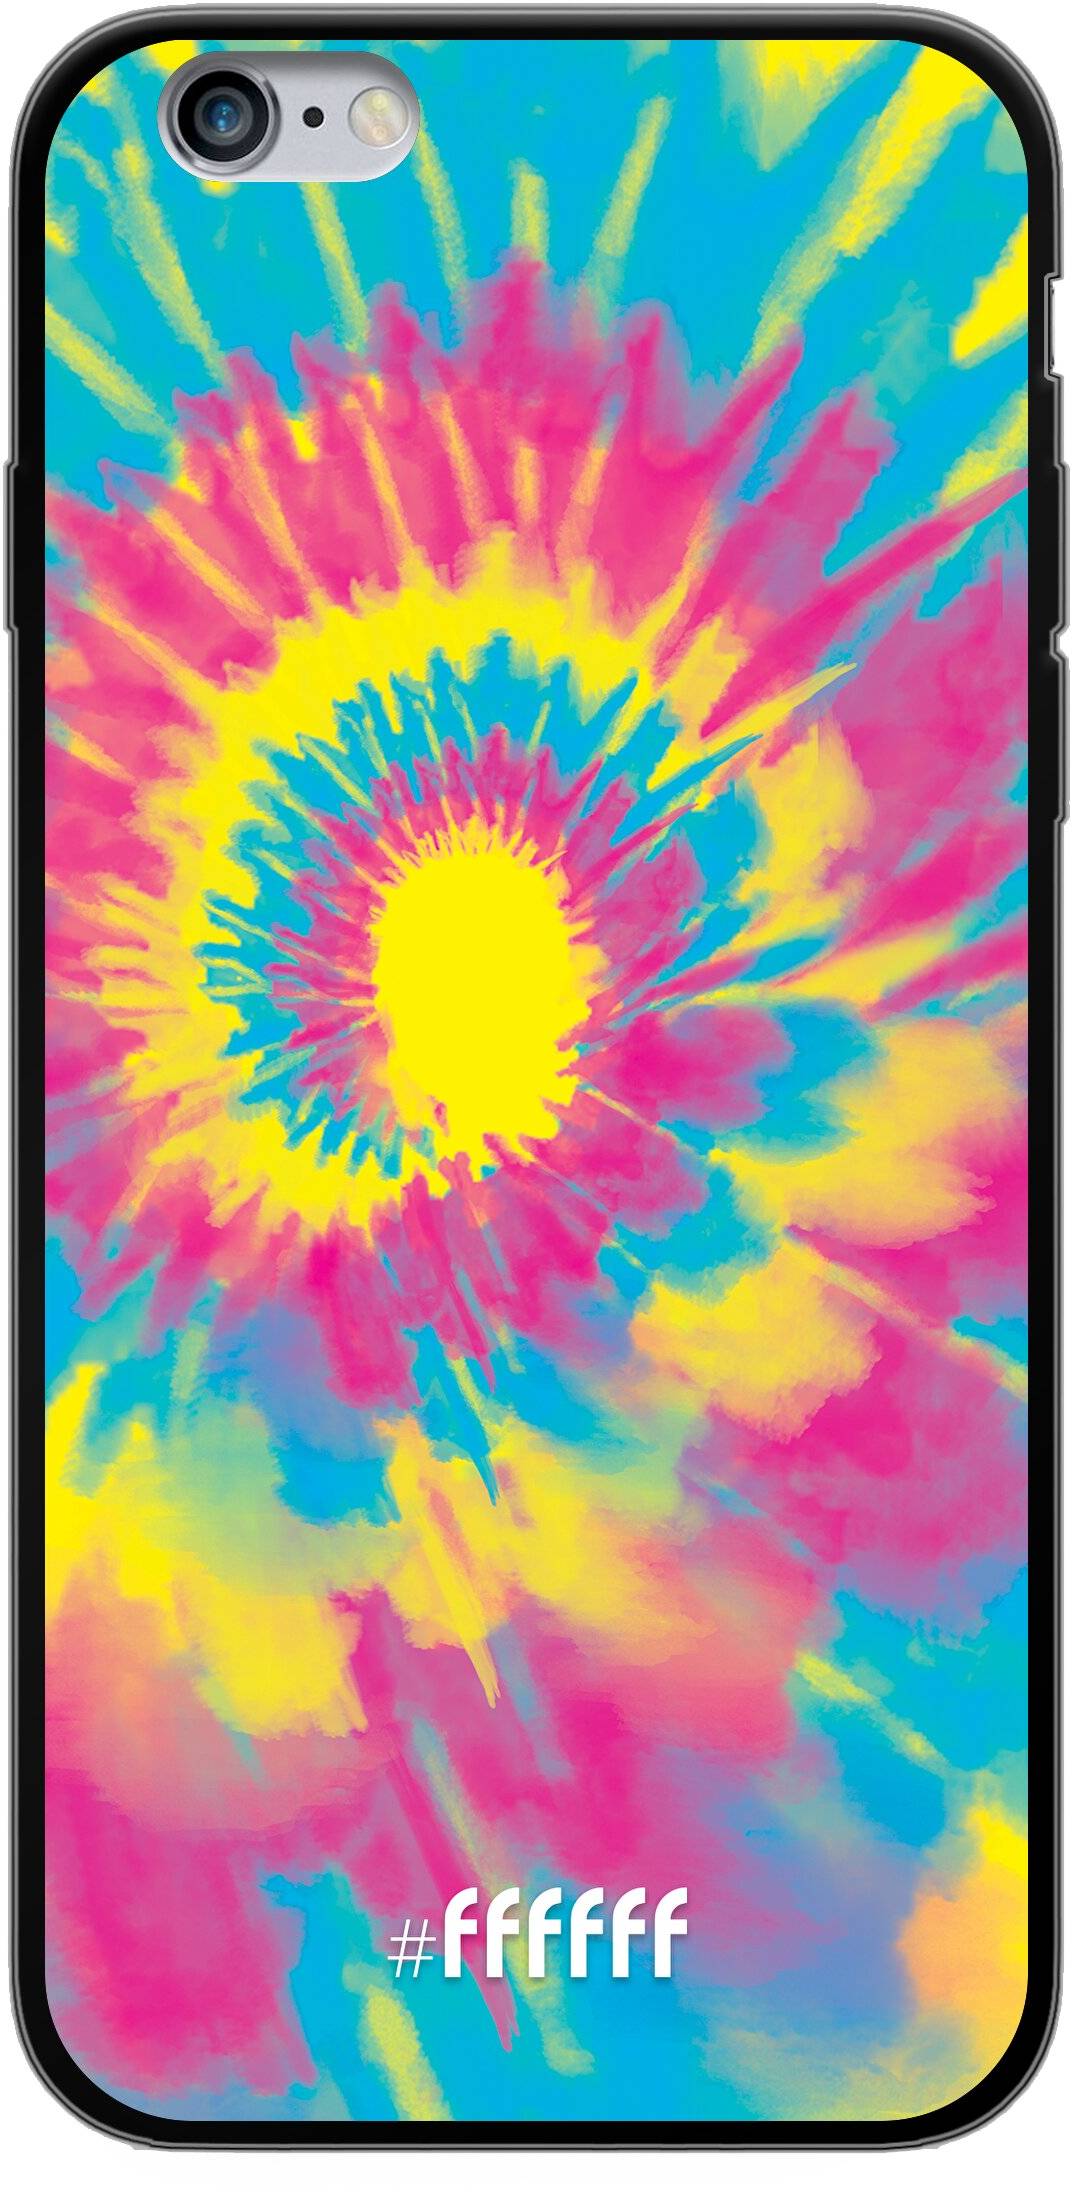 Psychedelic Tie Dye iPhone 6s